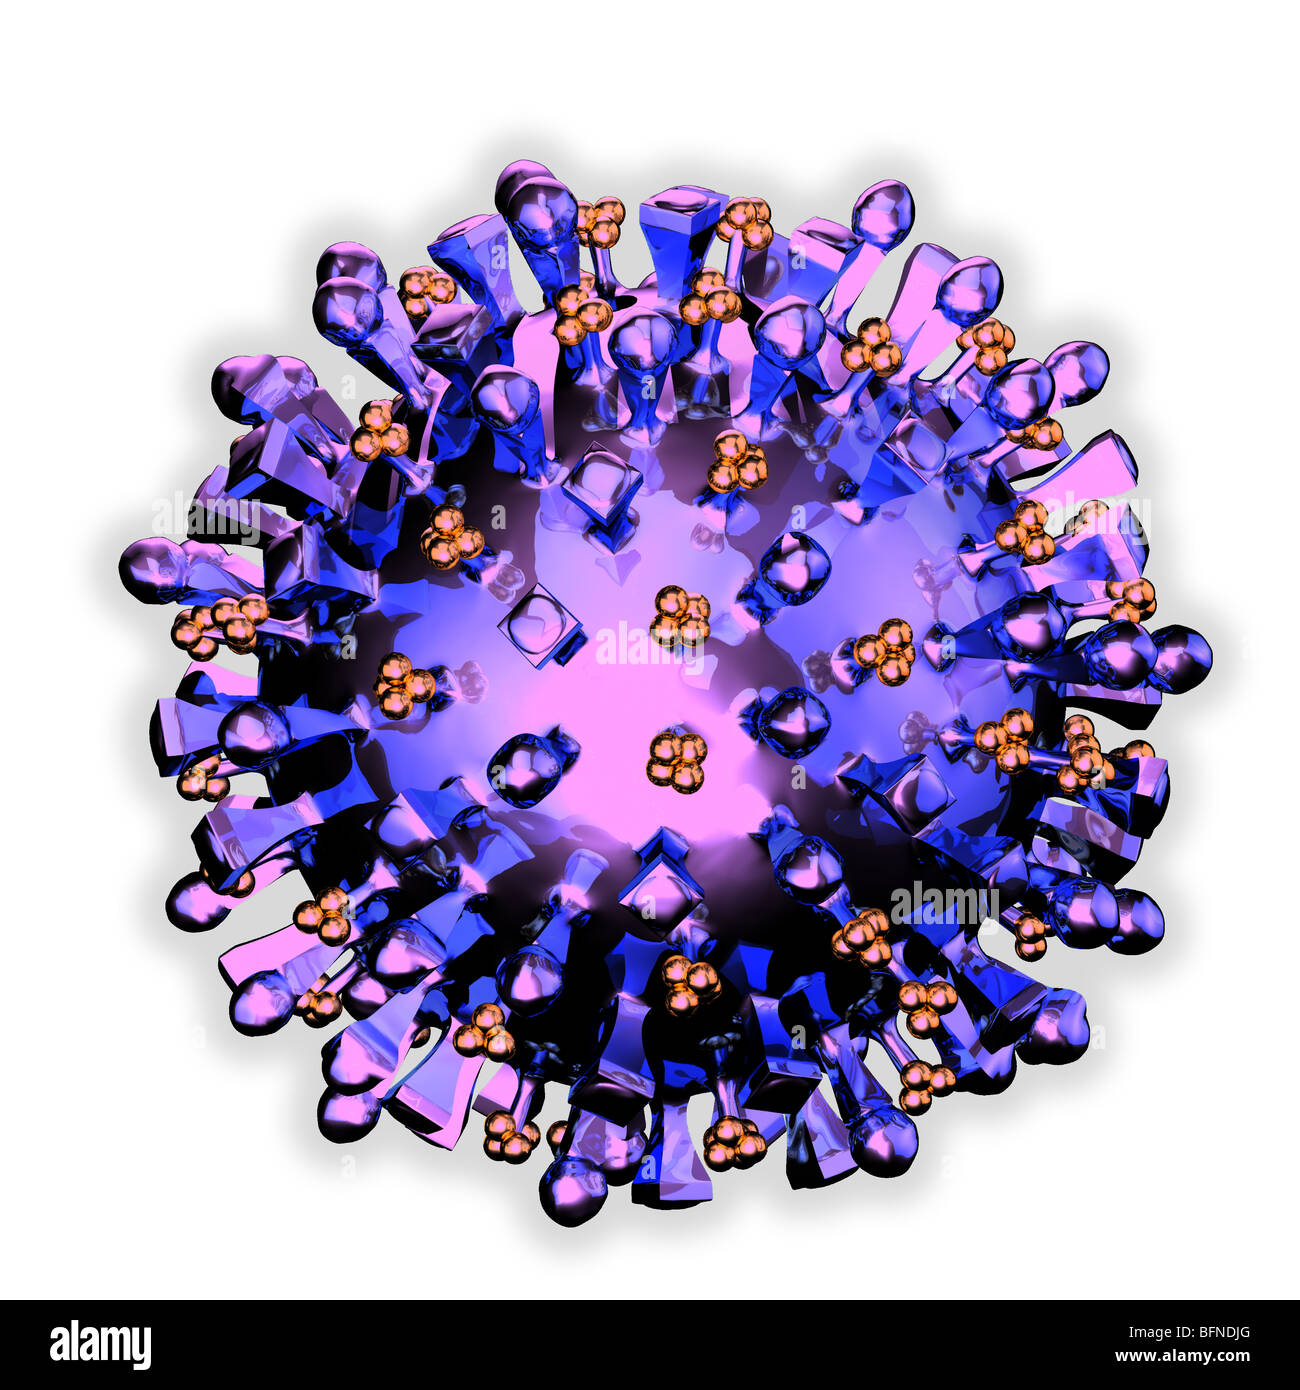 Computer generated three dimensional model of the H5N1 avian influenza virus. Stock Photo